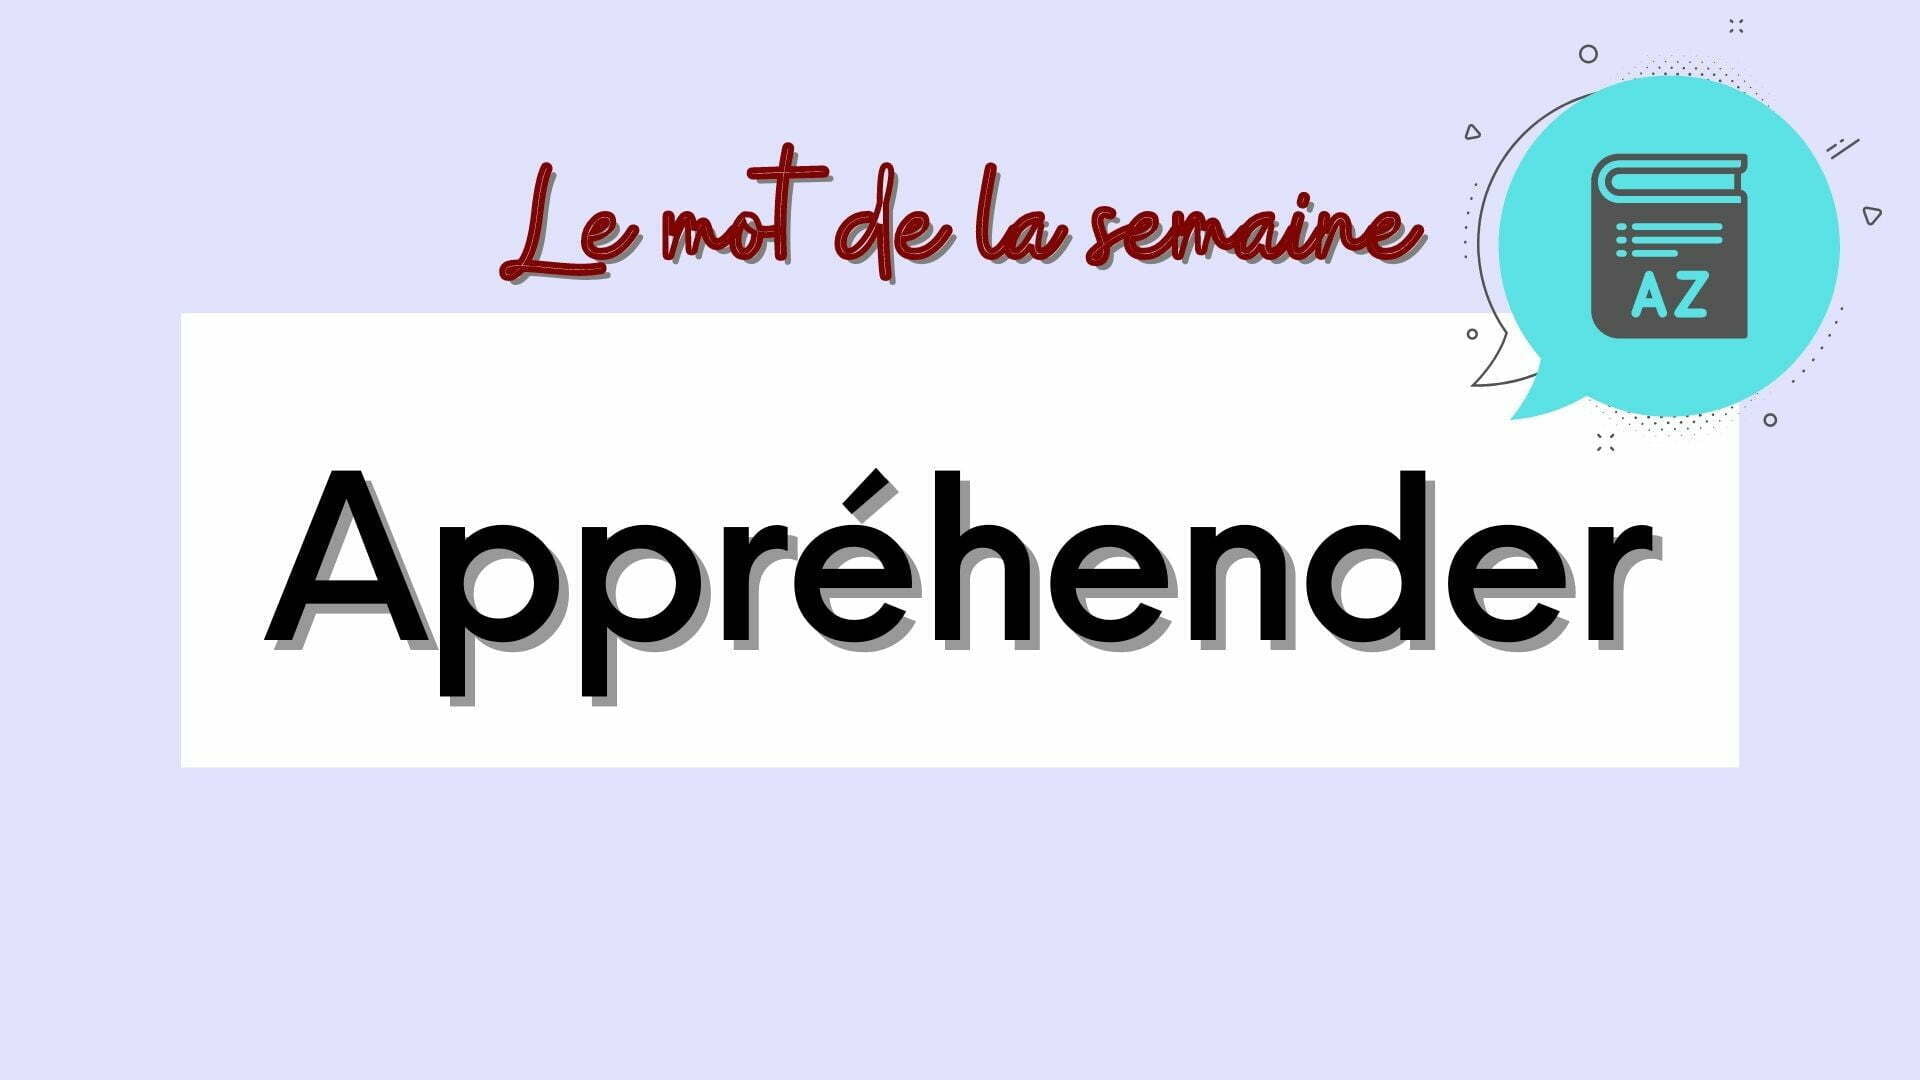 Appréhender in French